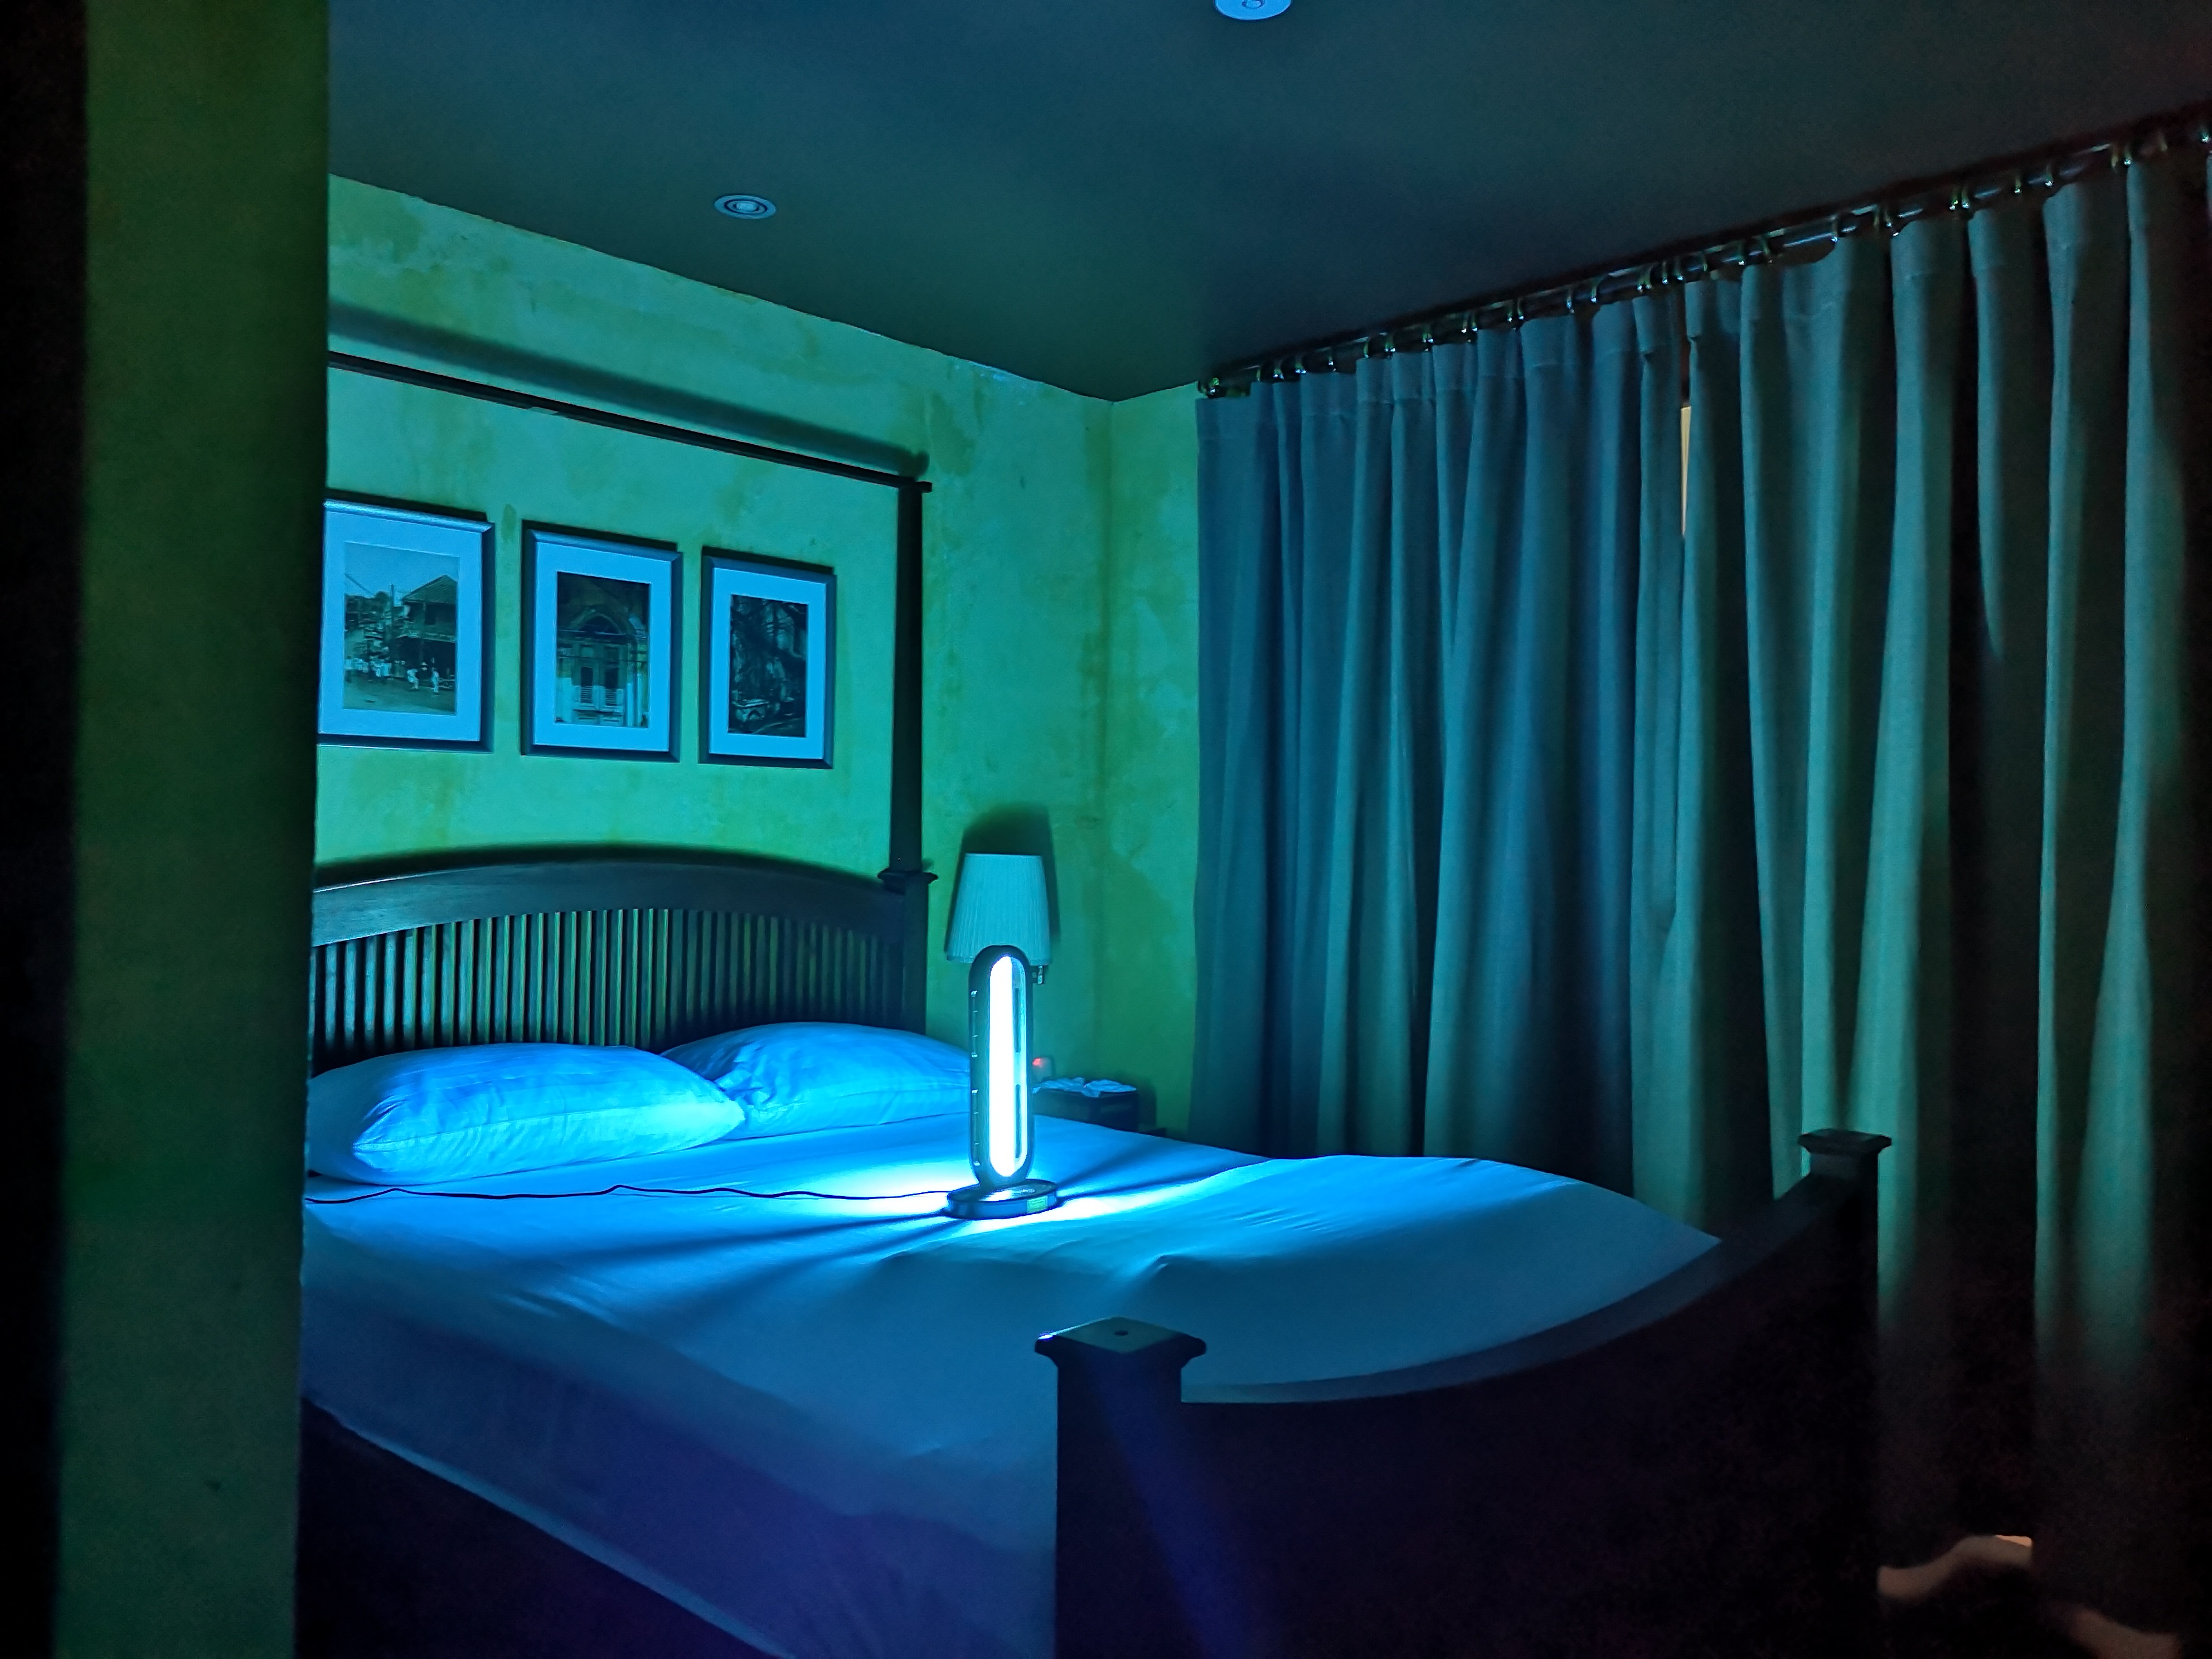 Room with Ultra Violet light